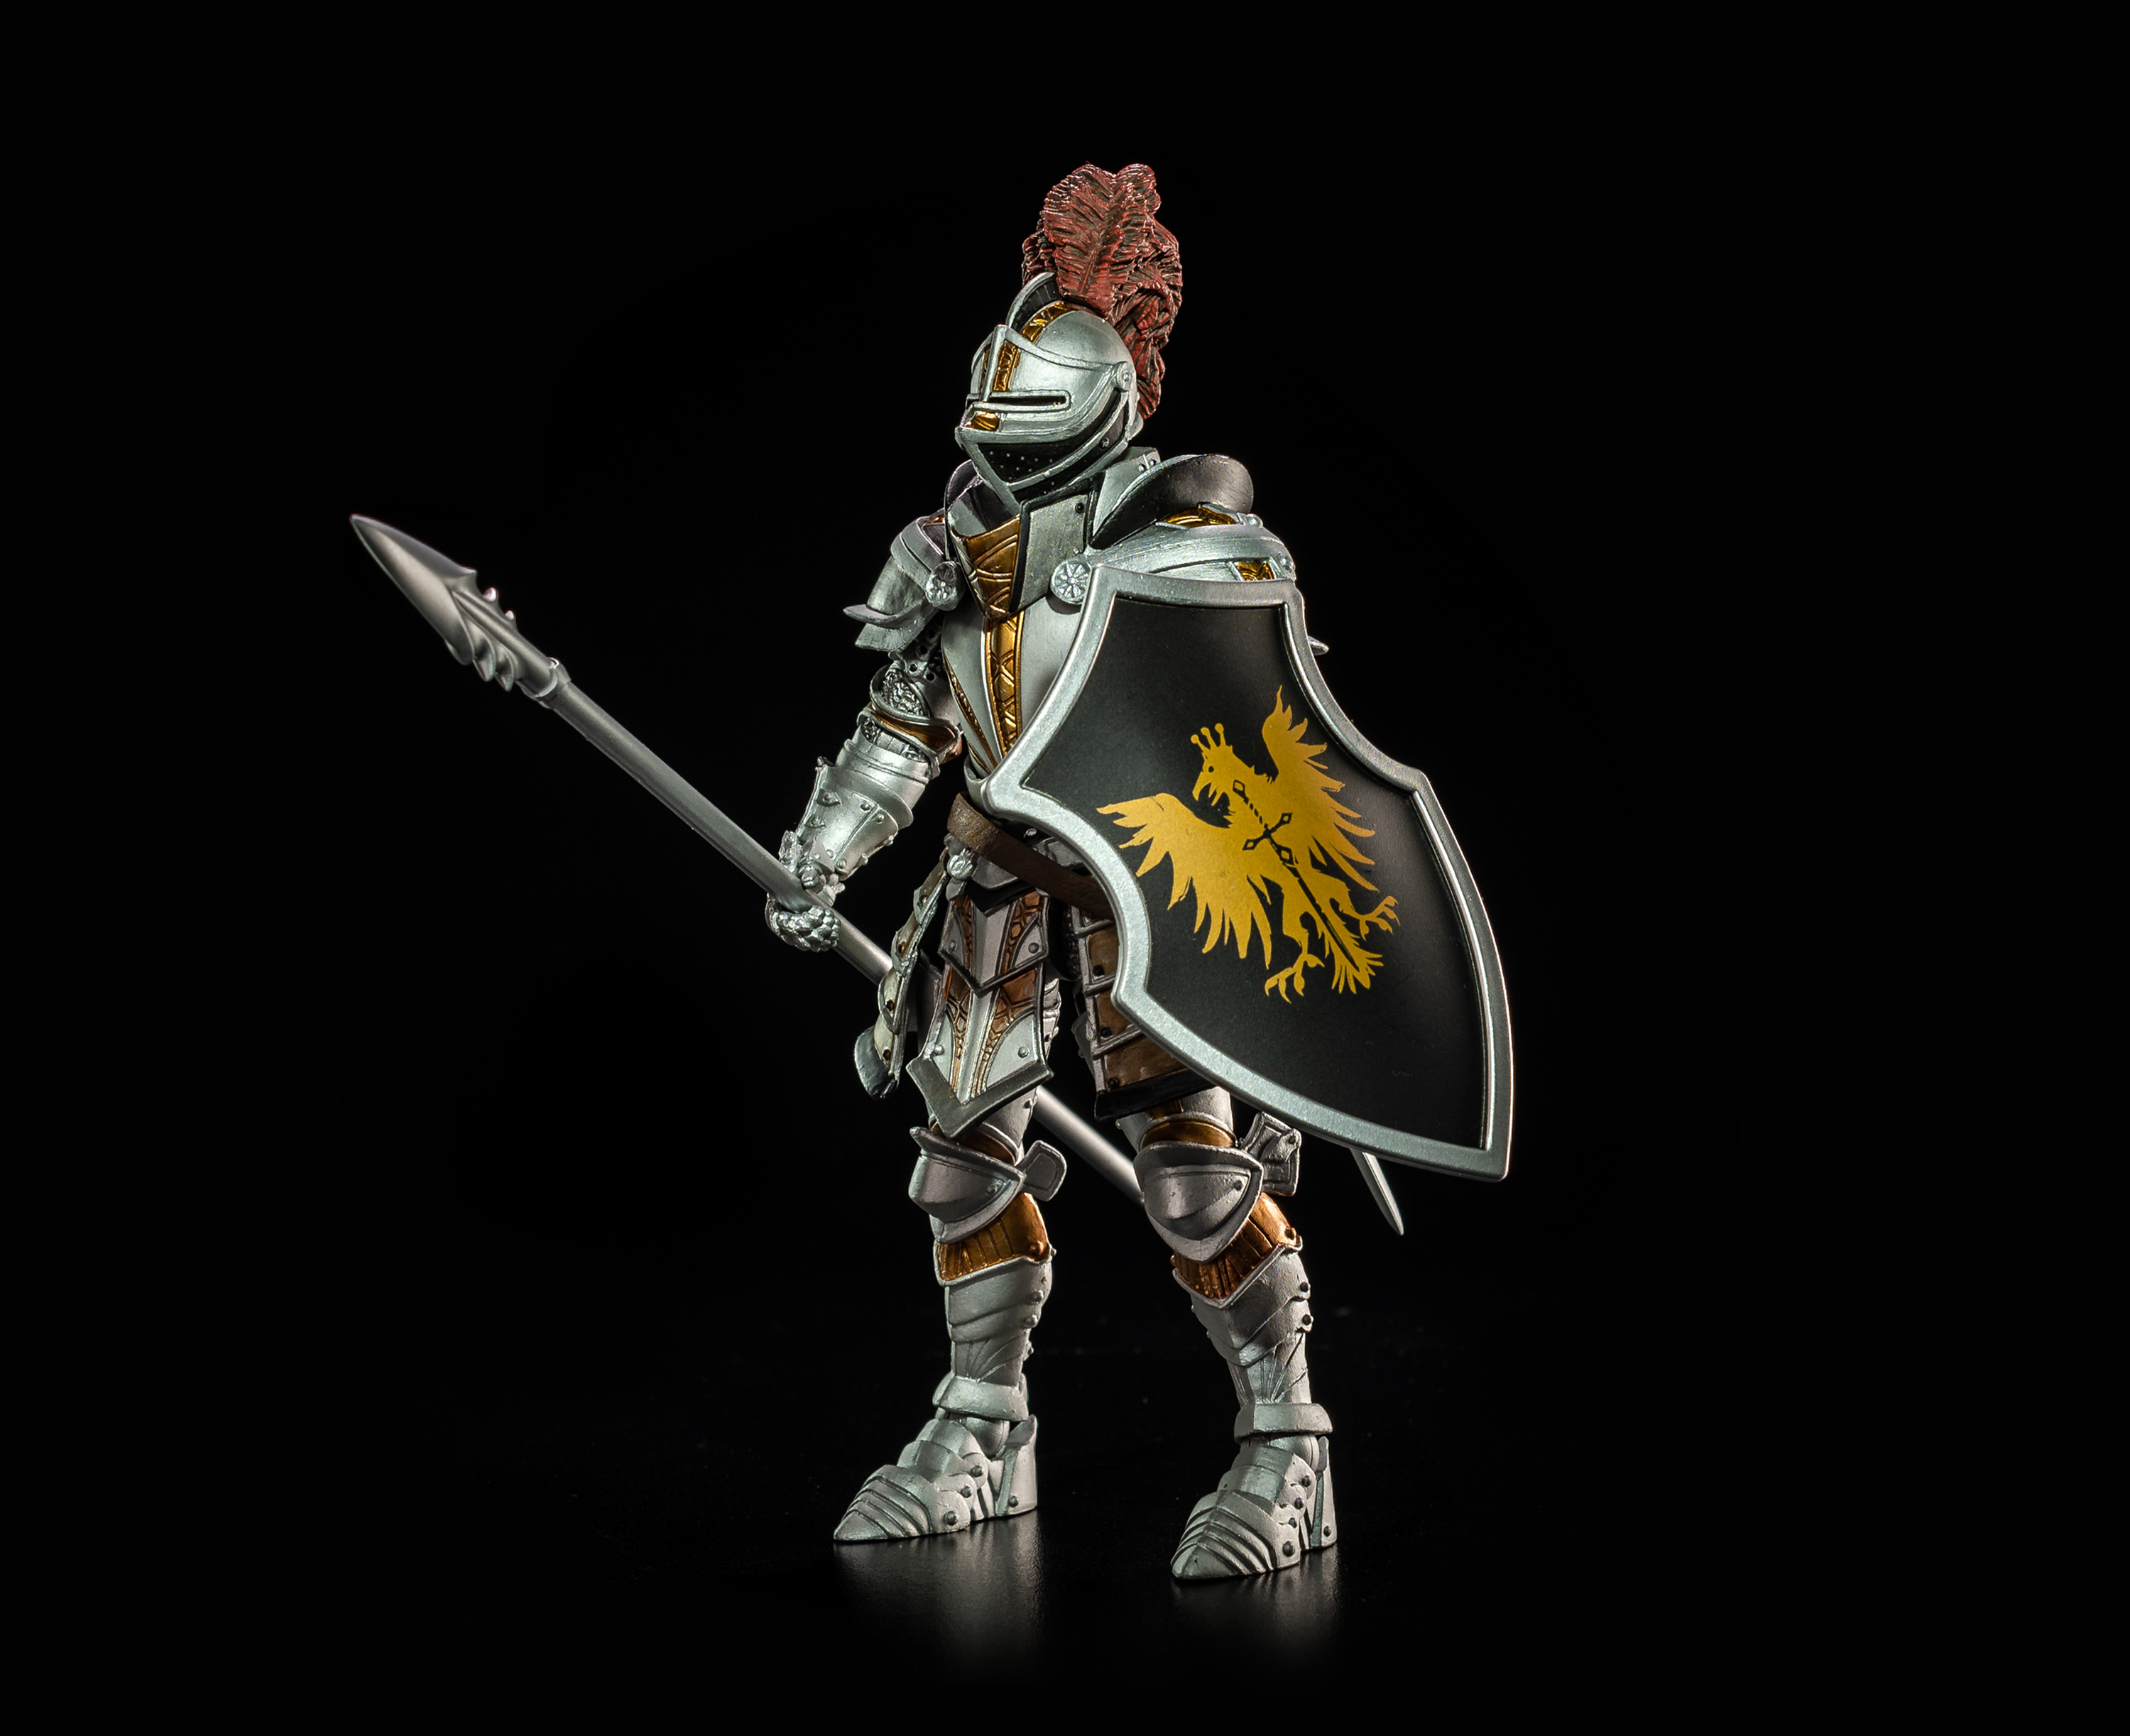 Sir Owain - Mythic Legions action figure from Four Horsemen Studios